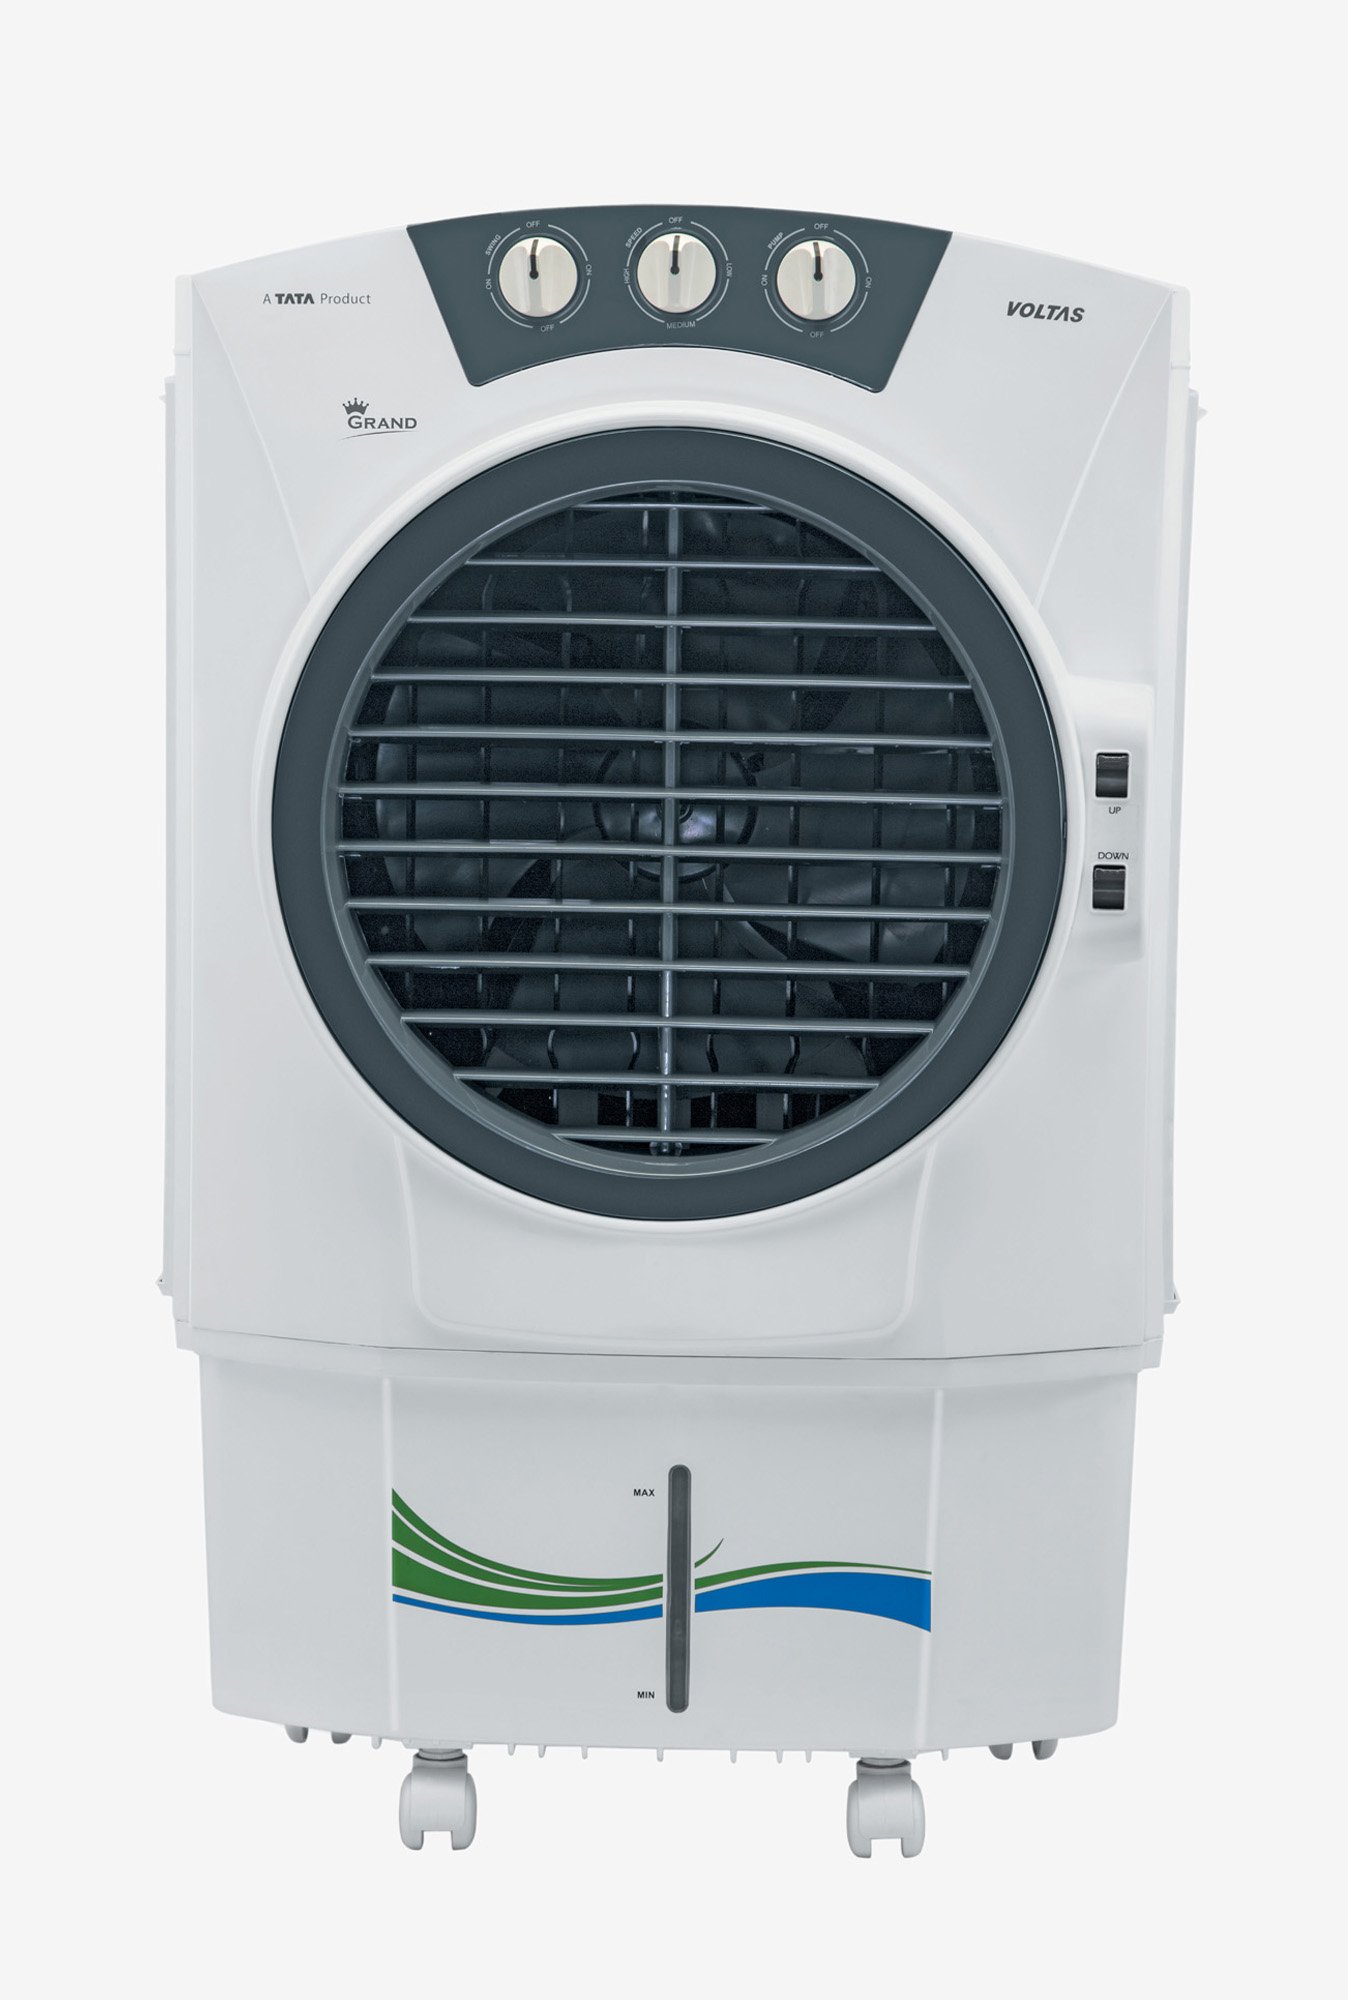 Buy Voltas Grand 52L Desert Air Cooler 